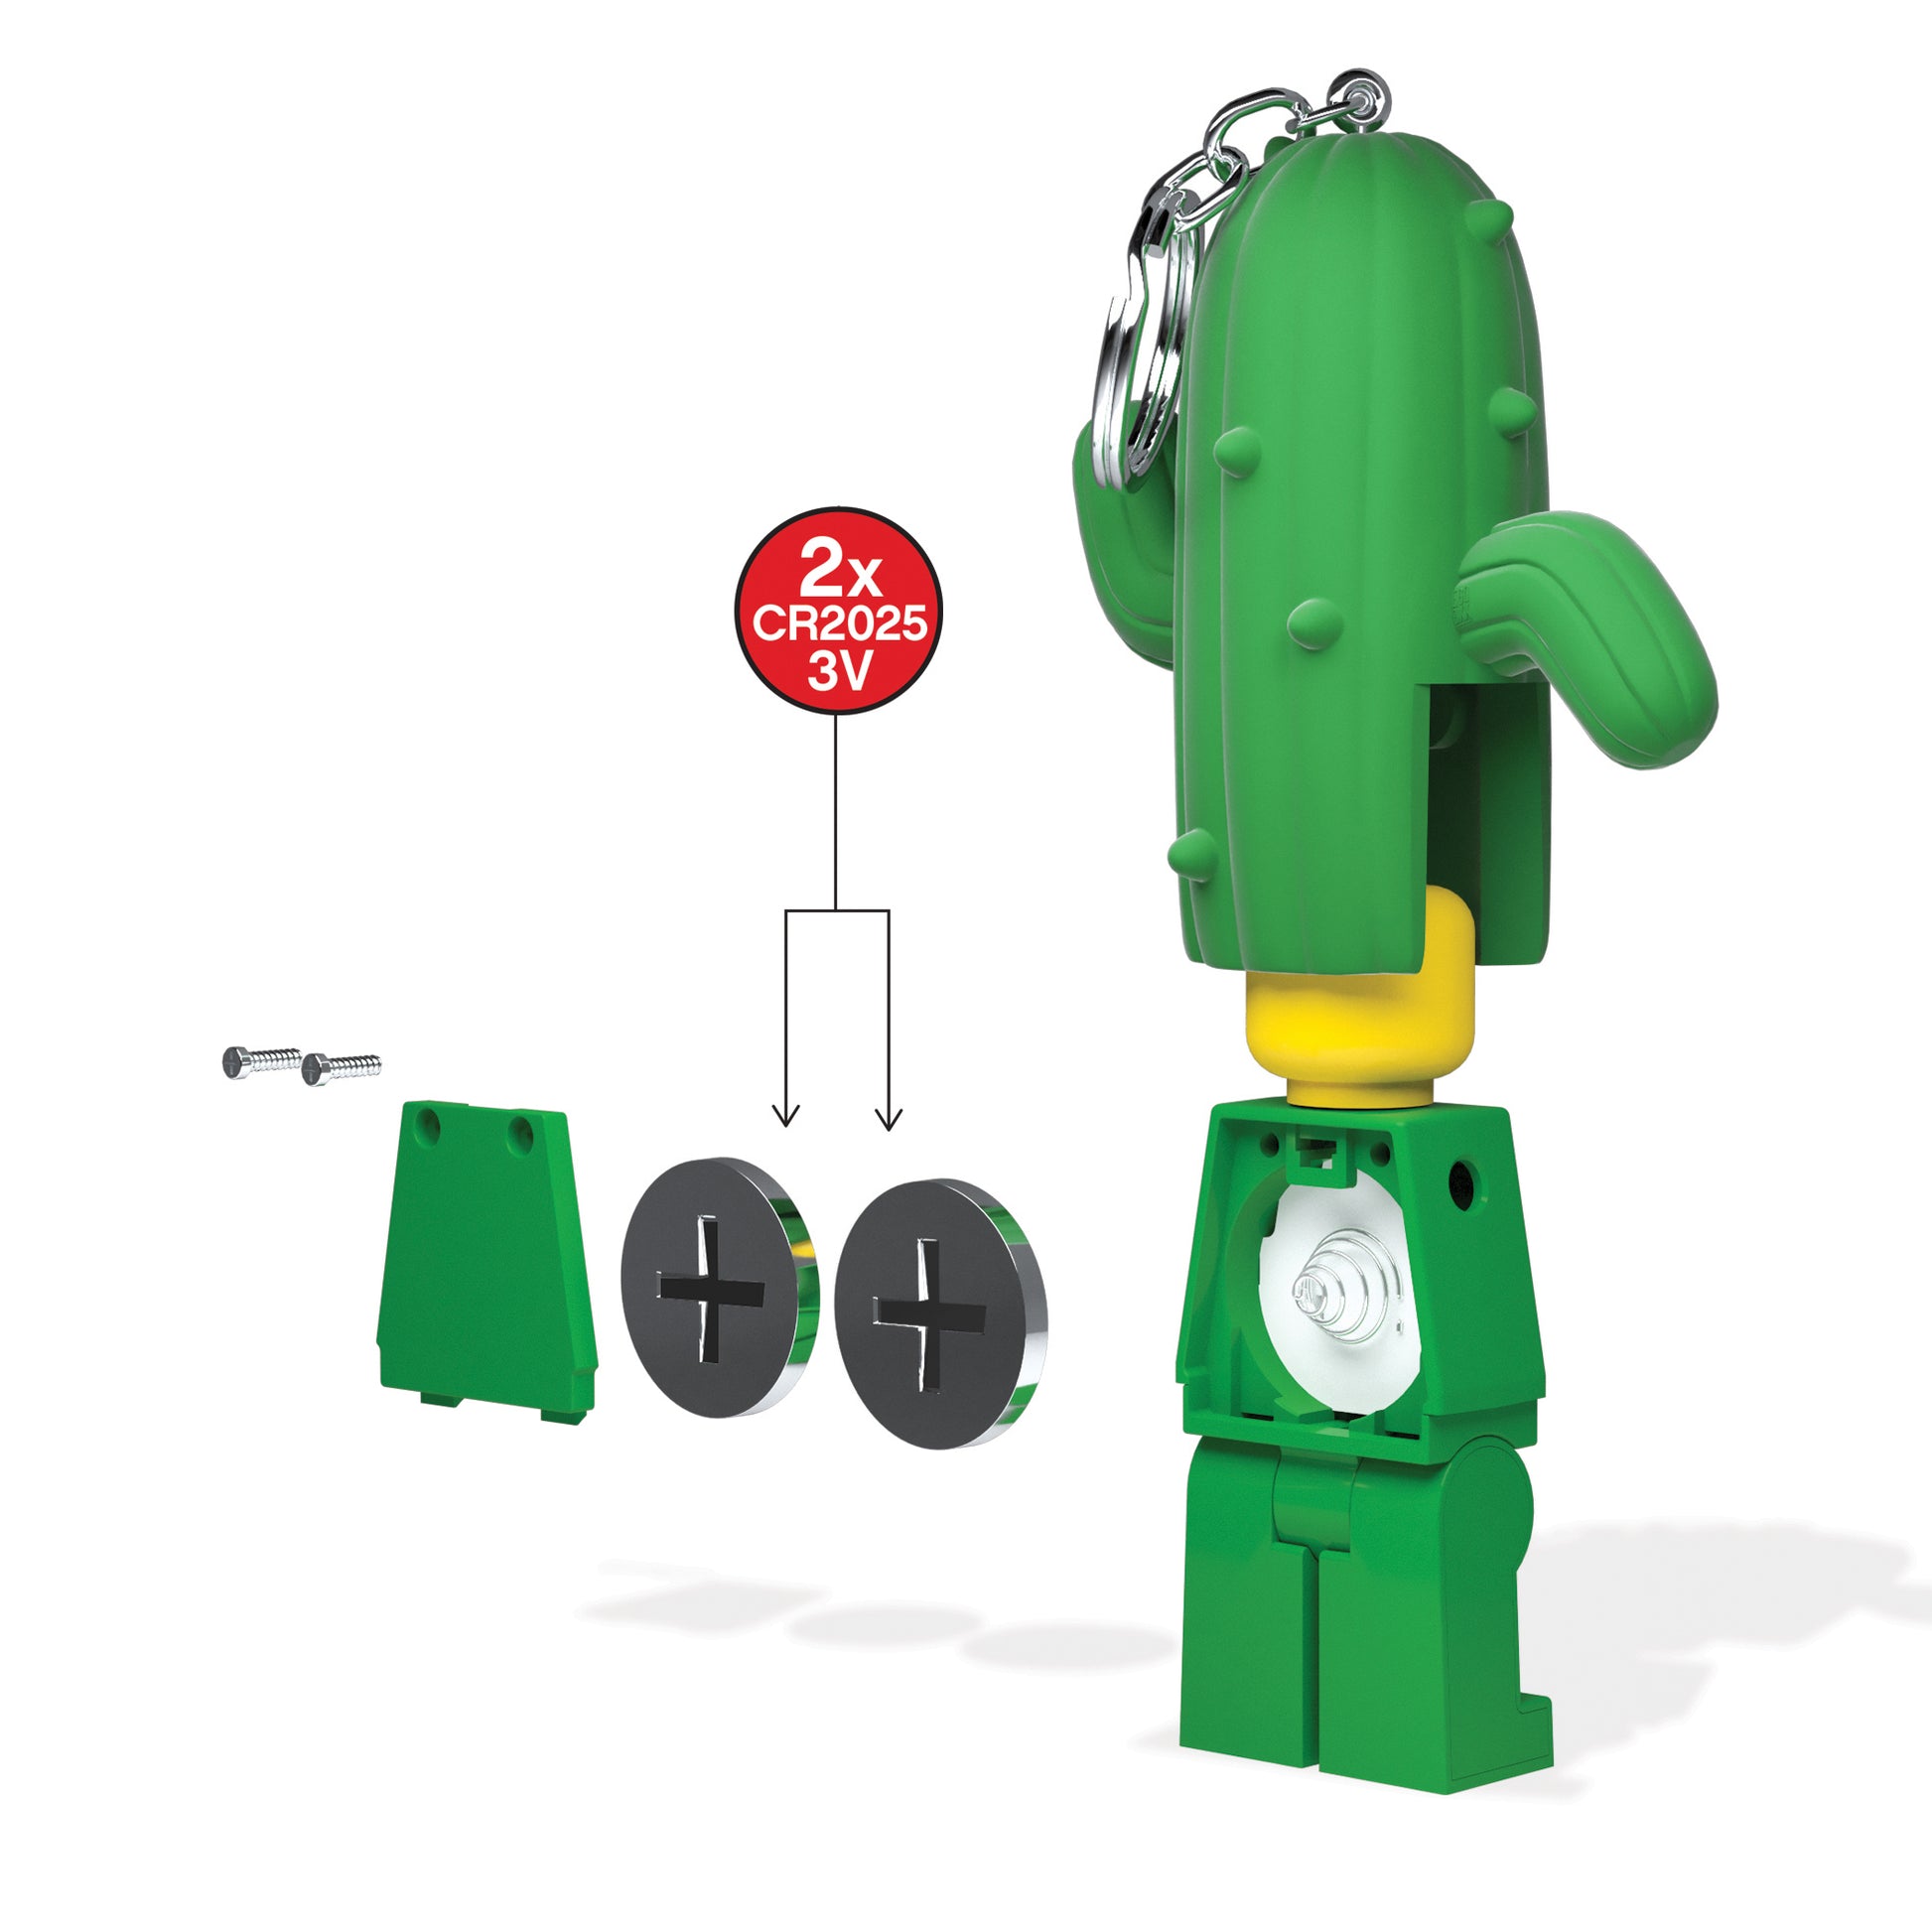 IQ LEGO® STAR WARS Yoda LED luminous Key Chain (KE11H) – IQ Hong Kong